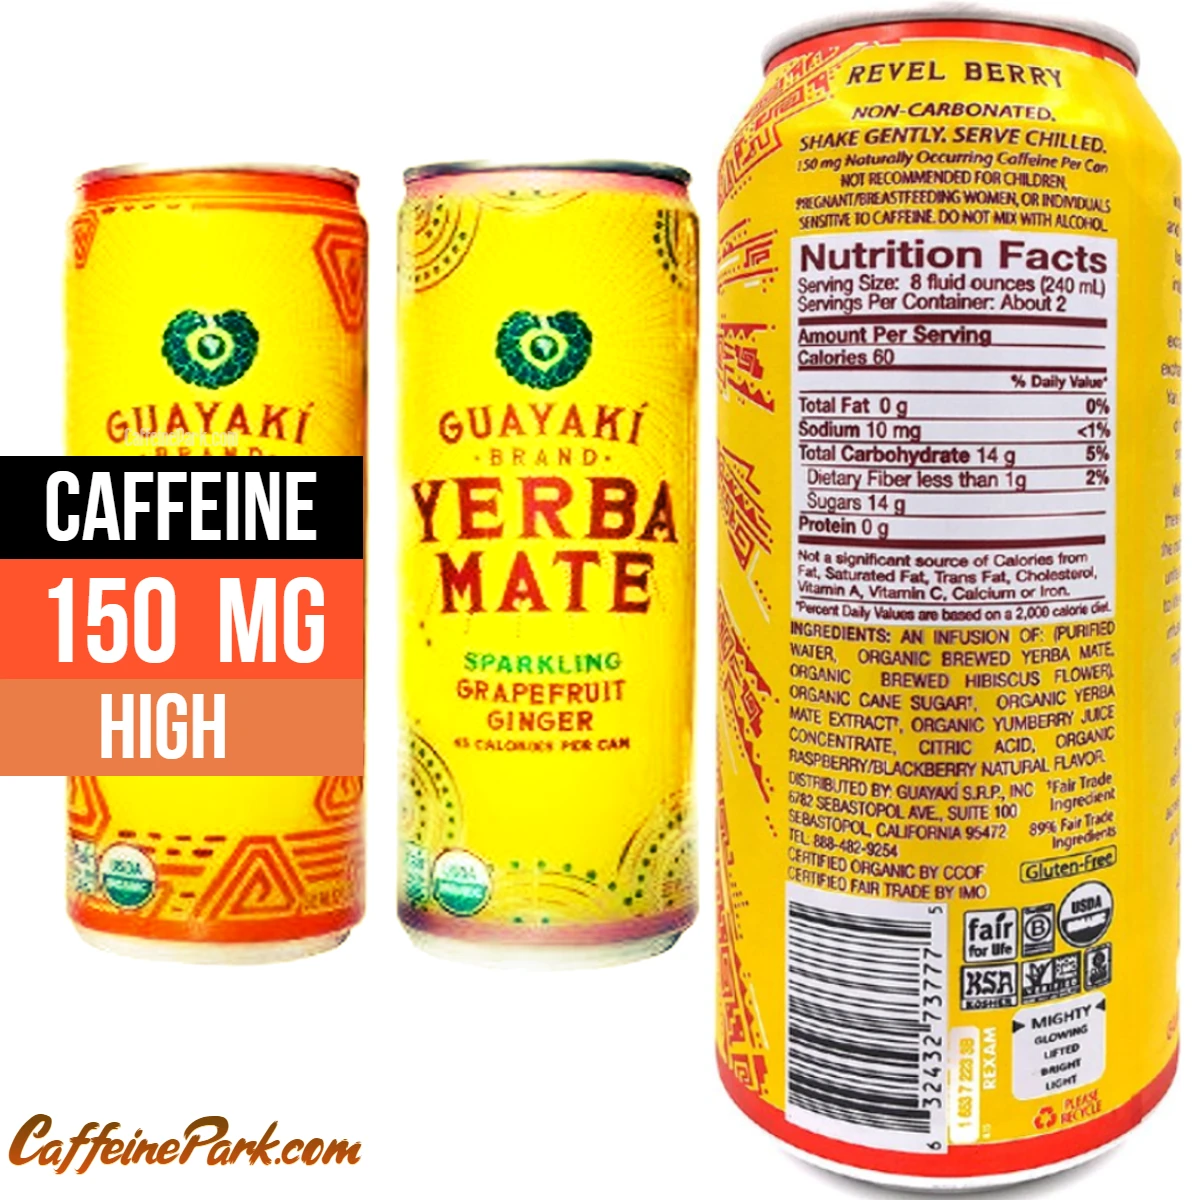 Slepen kip Geleidbaarheid How much caffeine is in Guayaki Canned Yerba Mate?